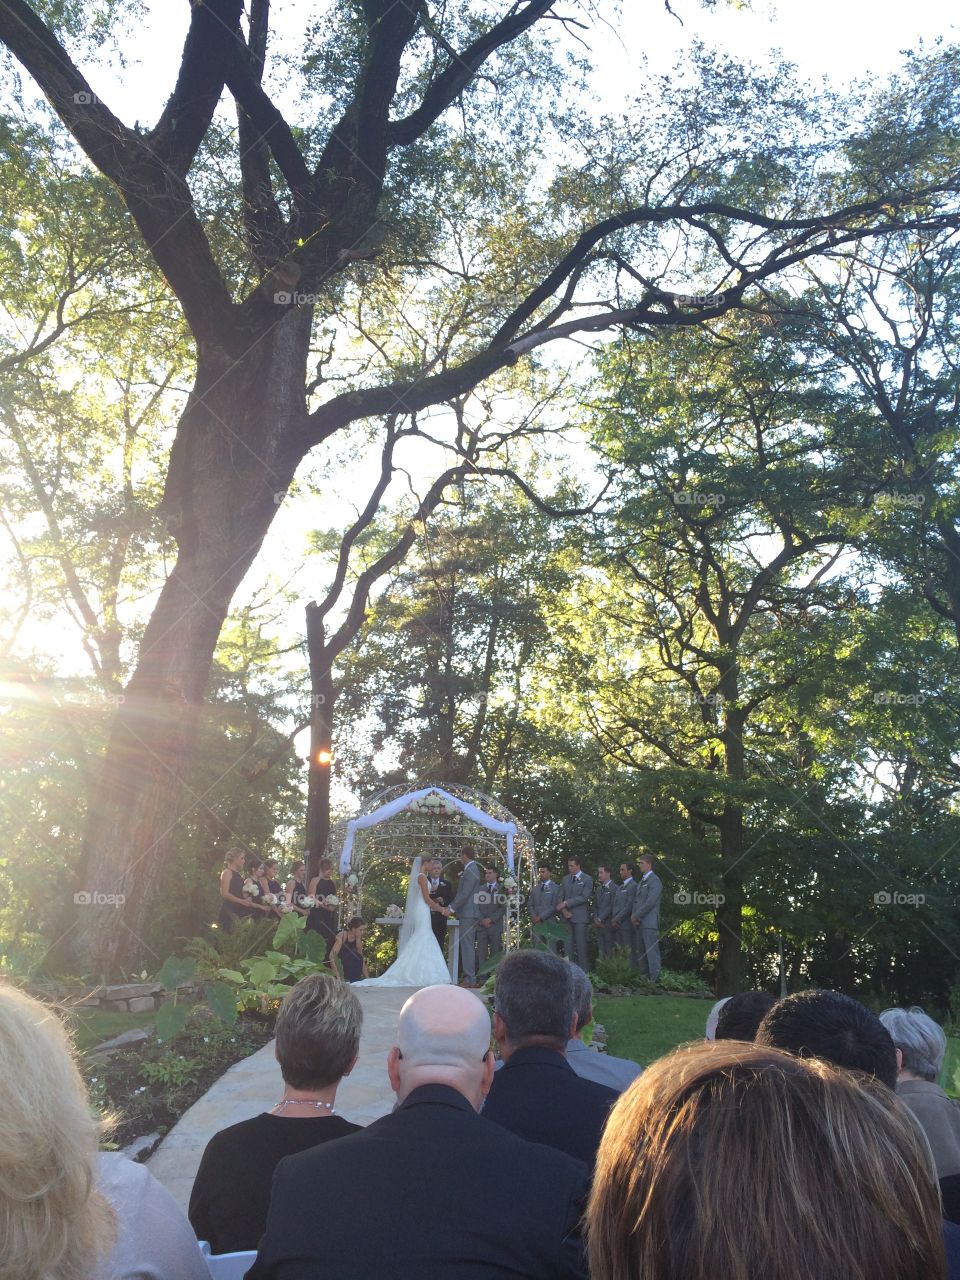 Wedding in a peaceful dusk light